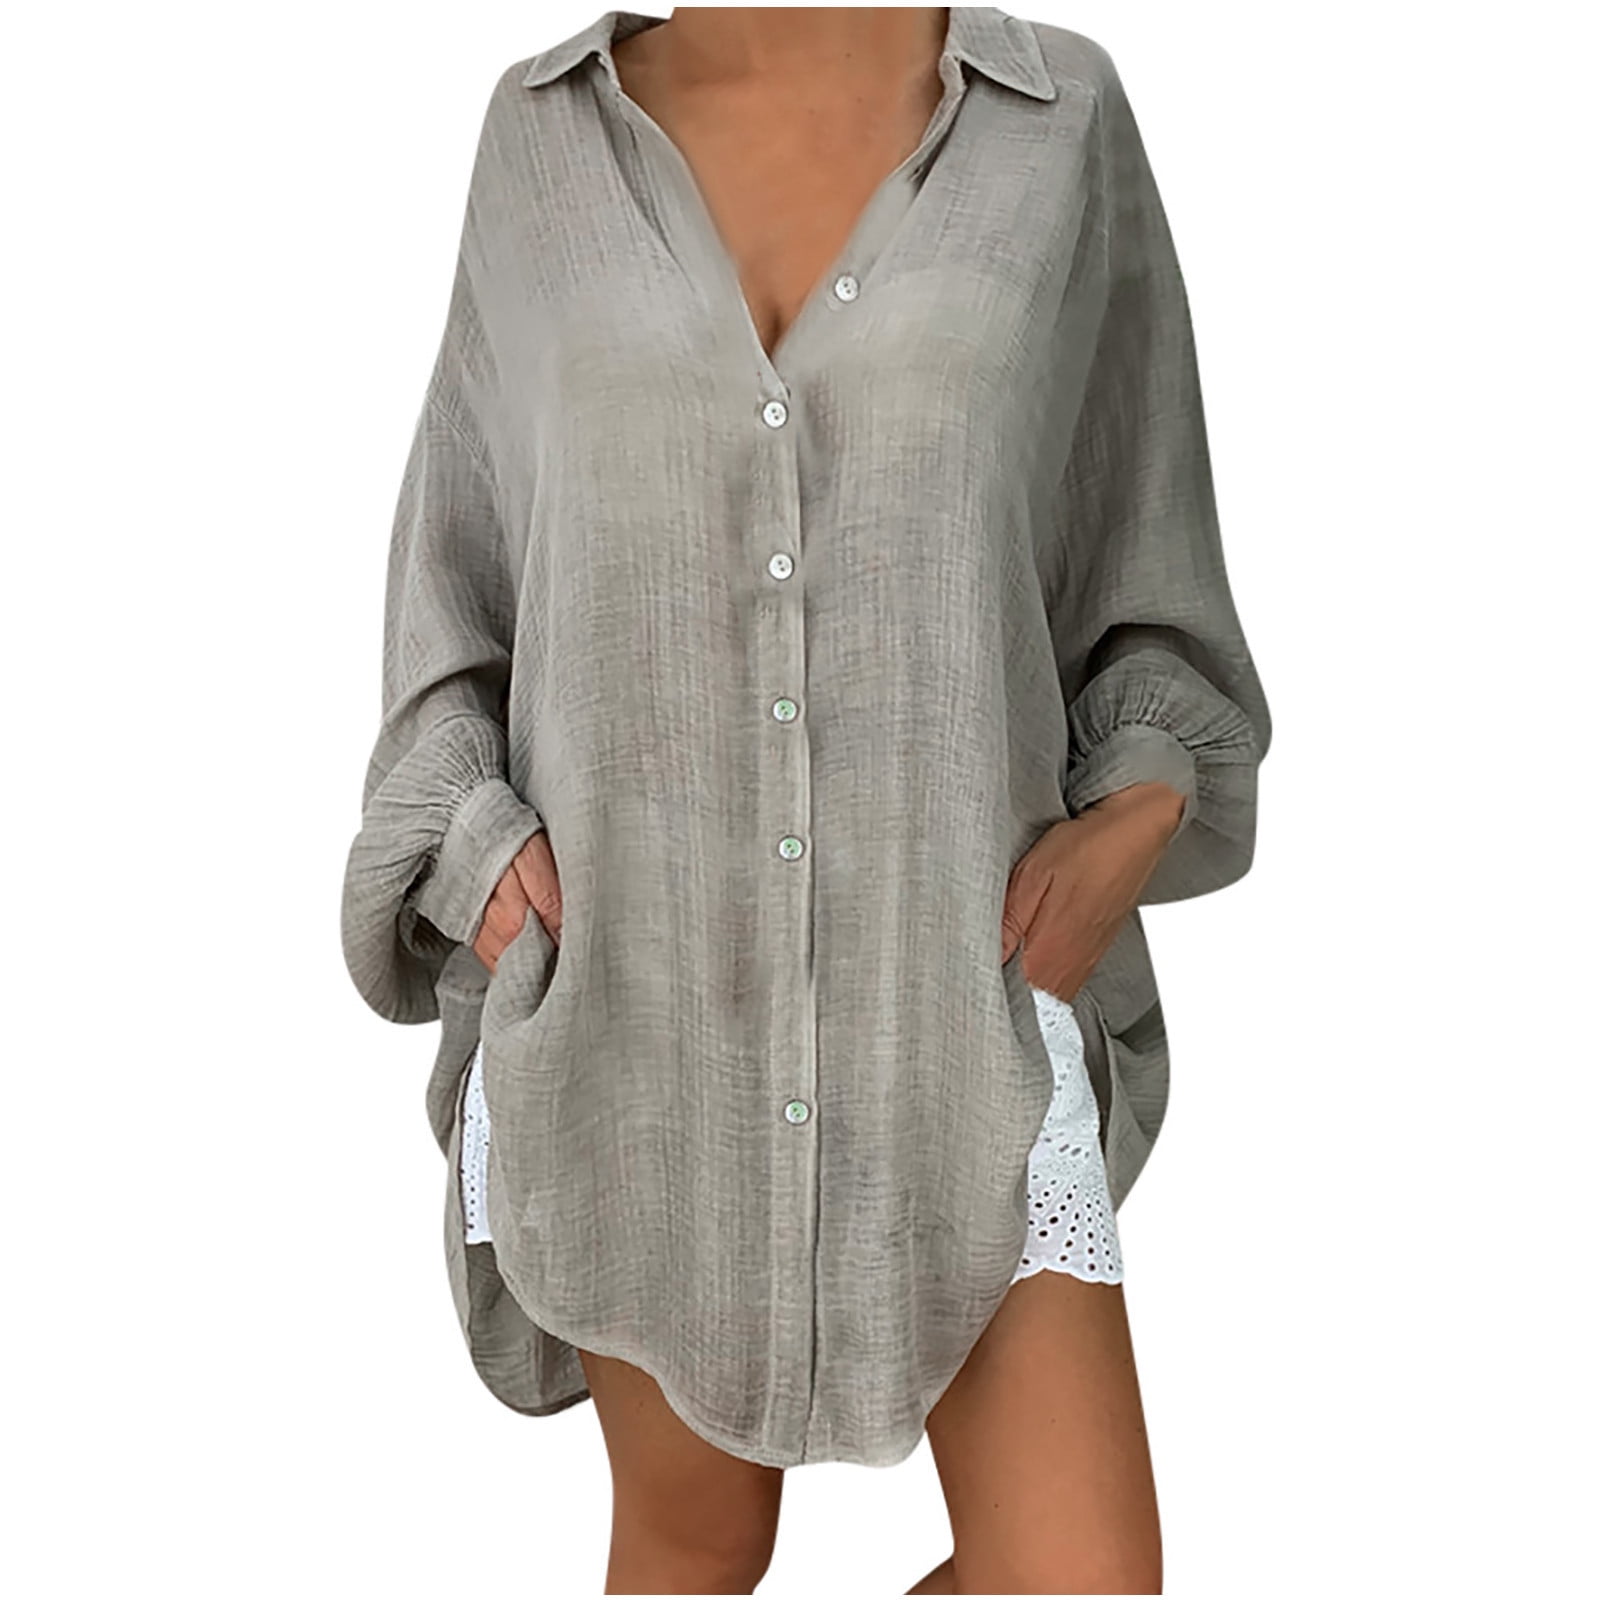 RYRJJ Womens Button Down Shirts Oversized Linen Cotton Long Sleeve Blouse  Tunic Tops Cover Up Shirt Loose Beach Shirt Dress(Blue,M) 